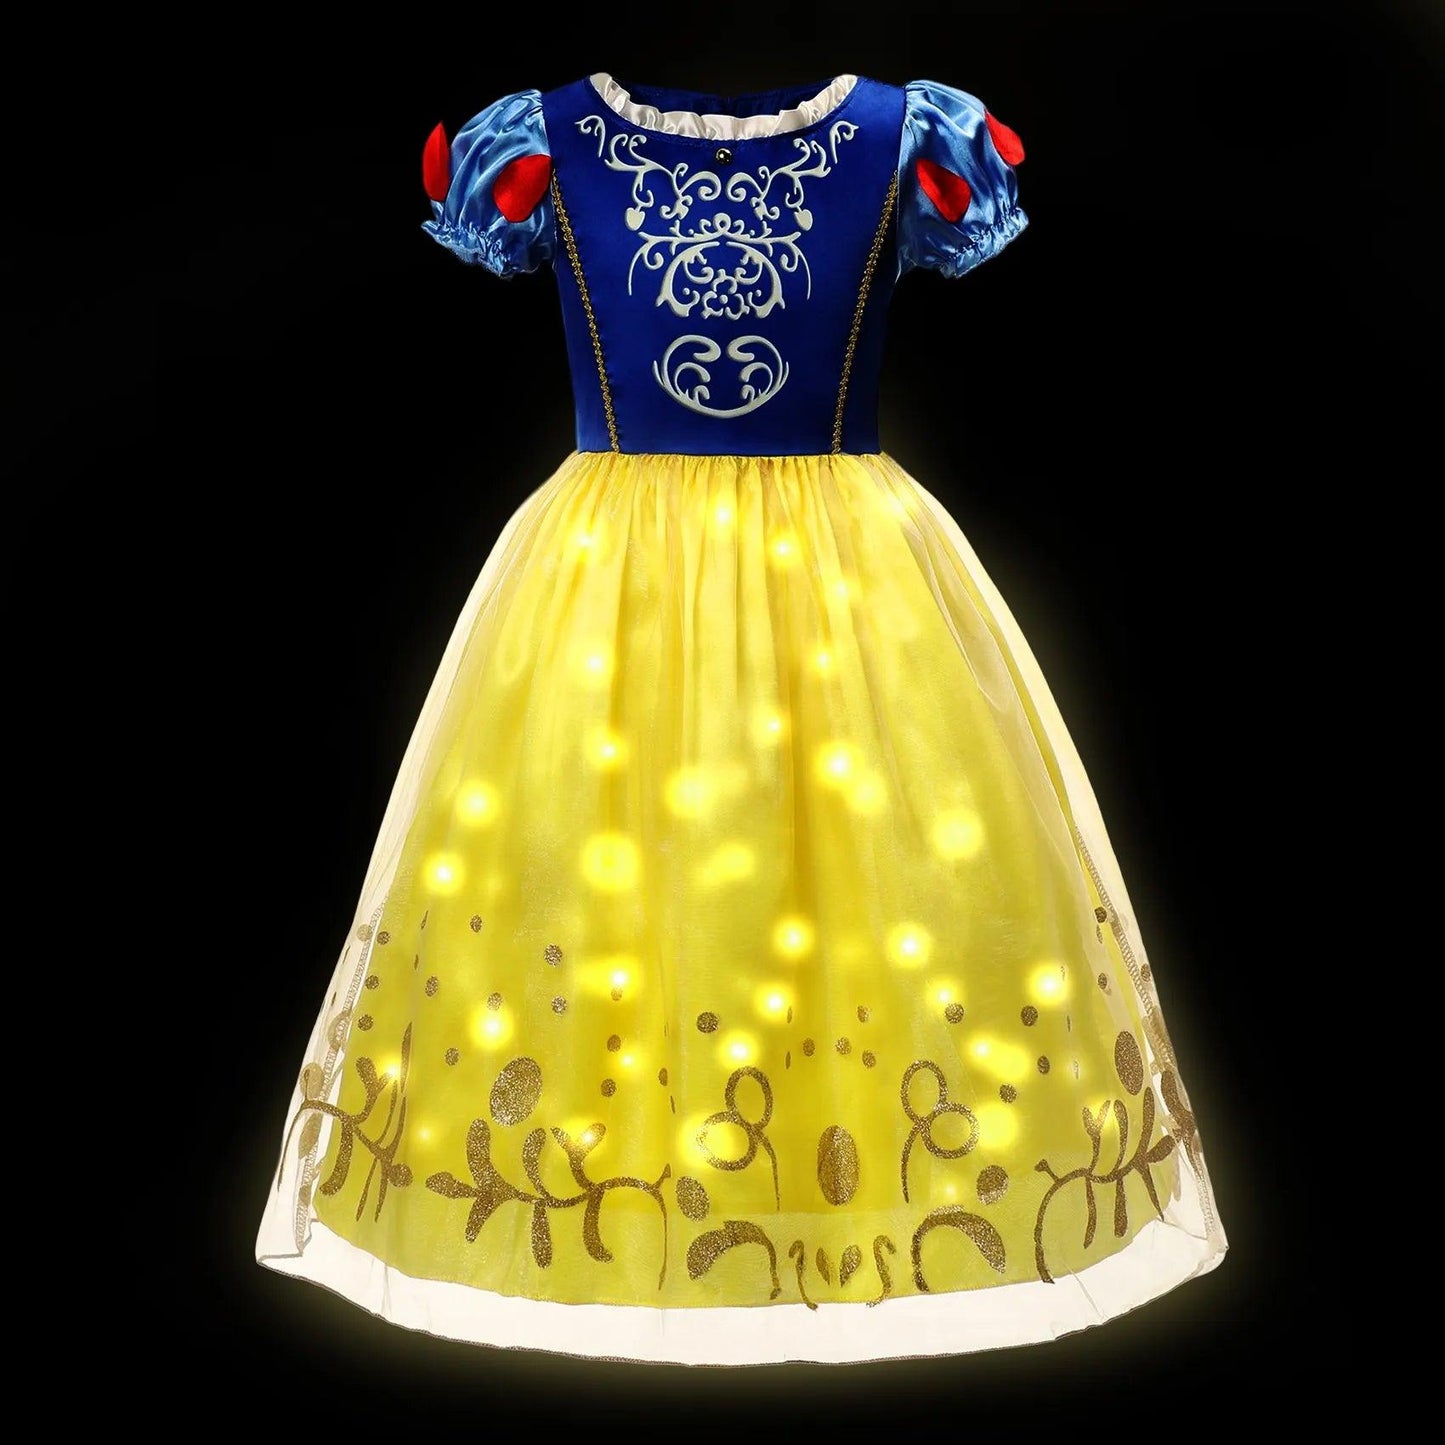 Light Up Princess Dresses - My Fancy Dress Box